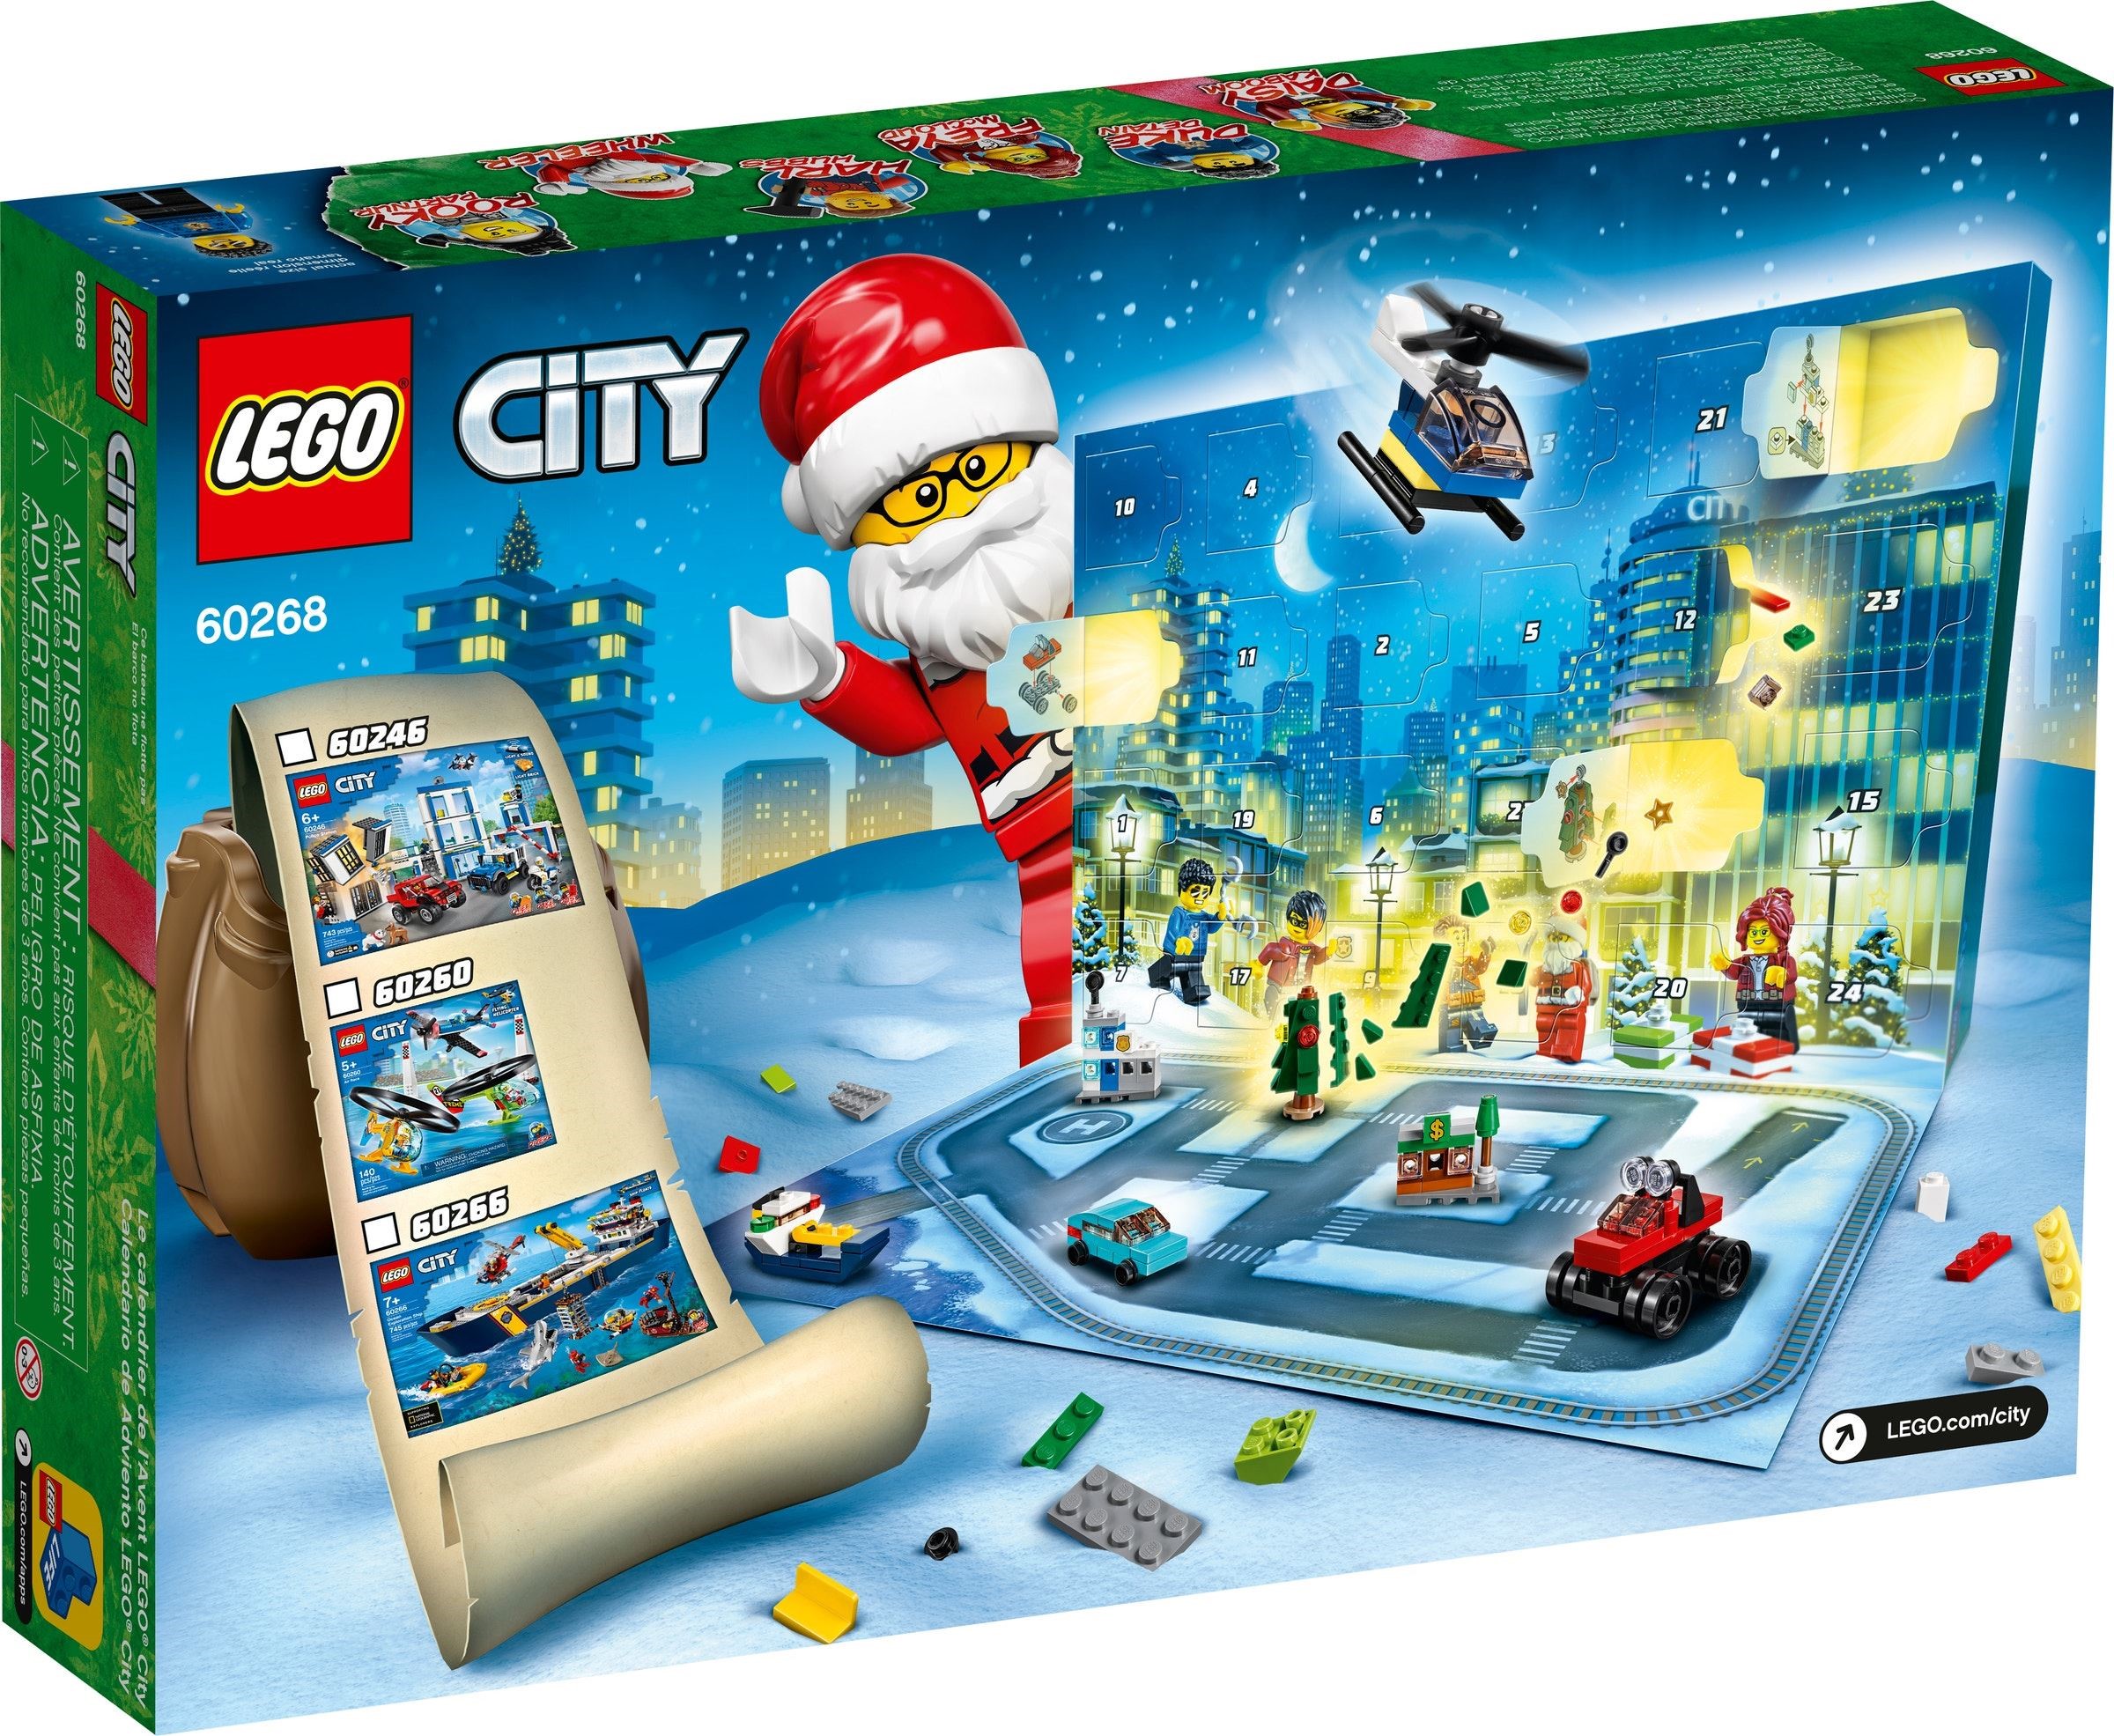 LEGO City Advent Calendar 24 Gifts 60268 Brand New